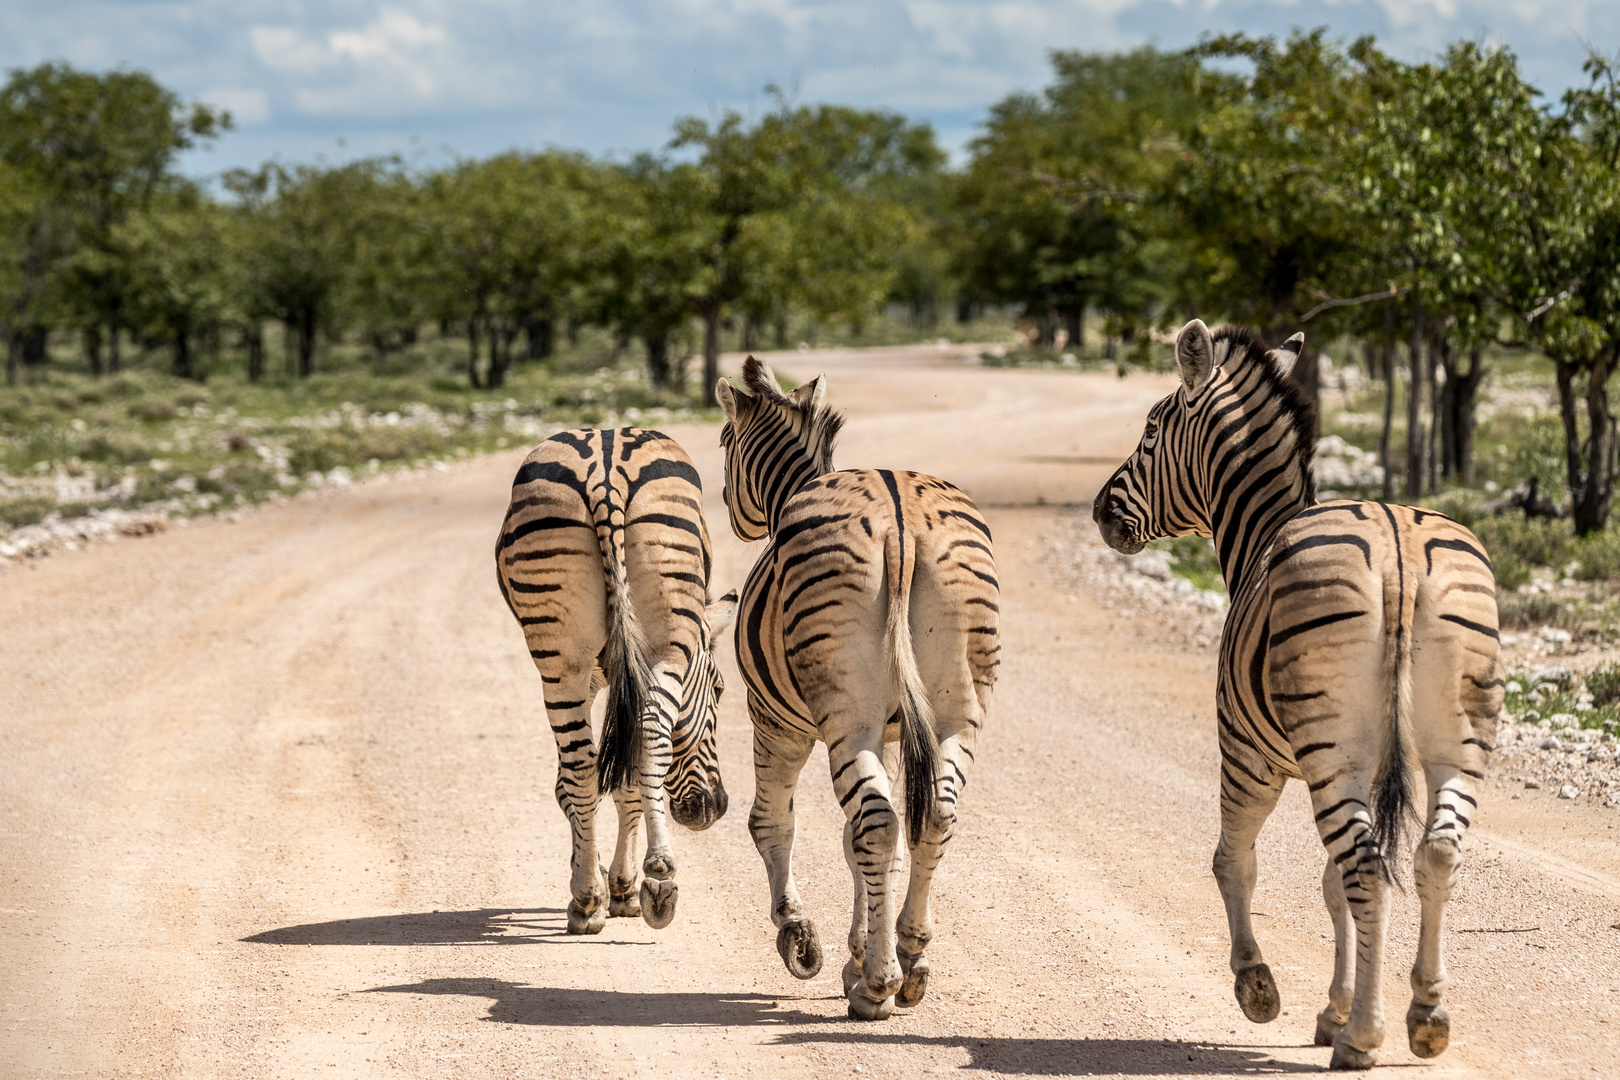 Zebras on road